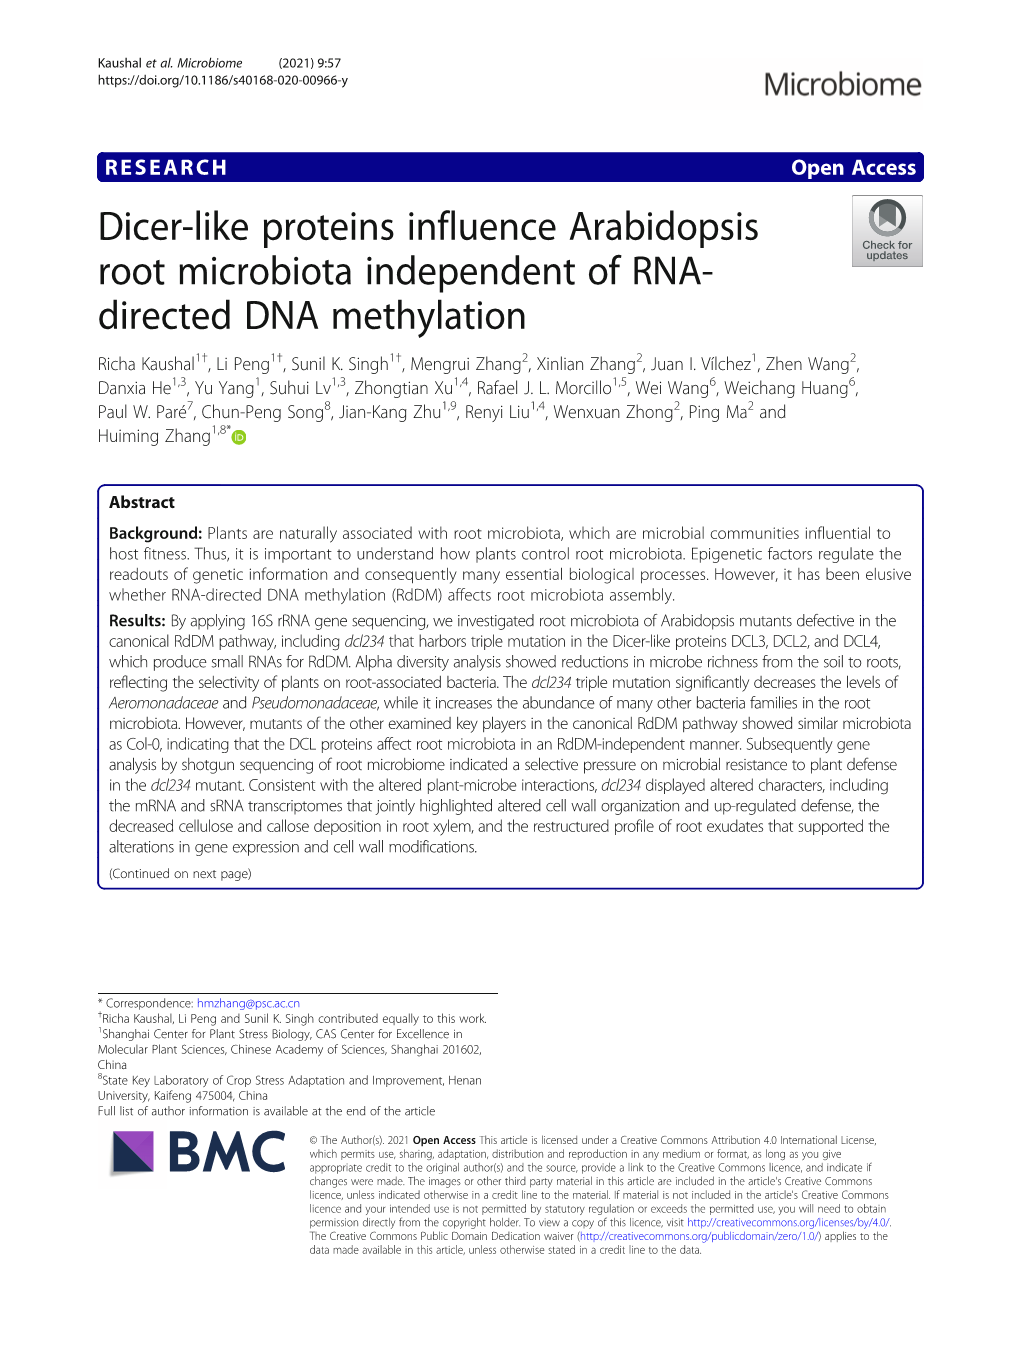 Dicer-Like Proteins Influence Arabidopsis Root Microbiota Independent of RNA- Directed DNA Methylation Richa Kaushal1†, Li Peng1†, Sunil K